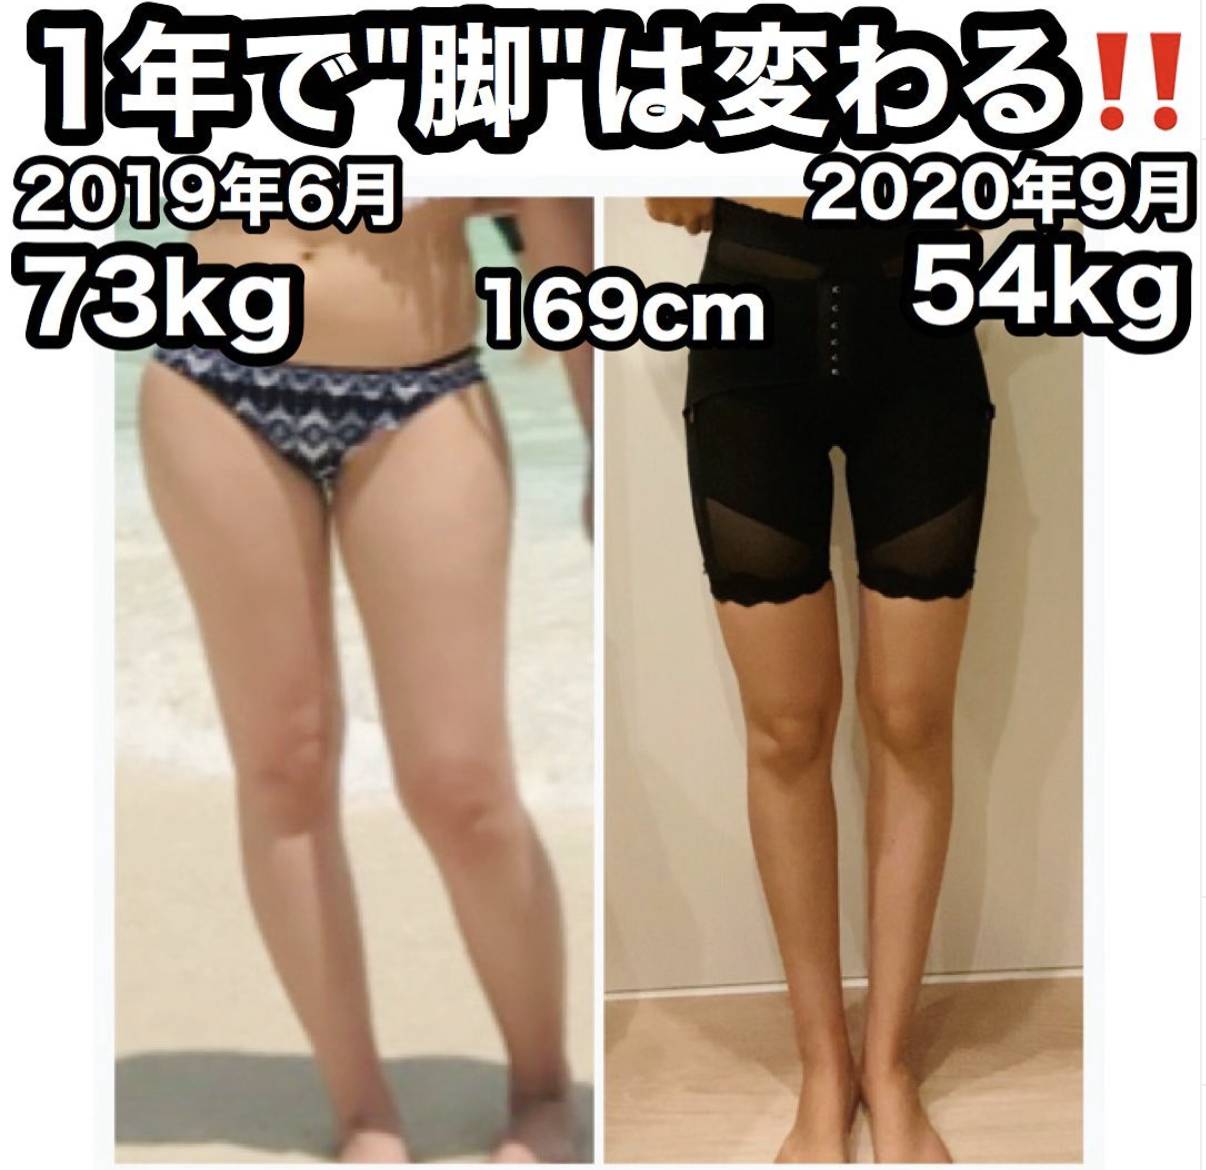 纖腰纖到着加細碼！日本潮媽由77kg減至54kg全靠2招 (Instagram @ame_mamglm)